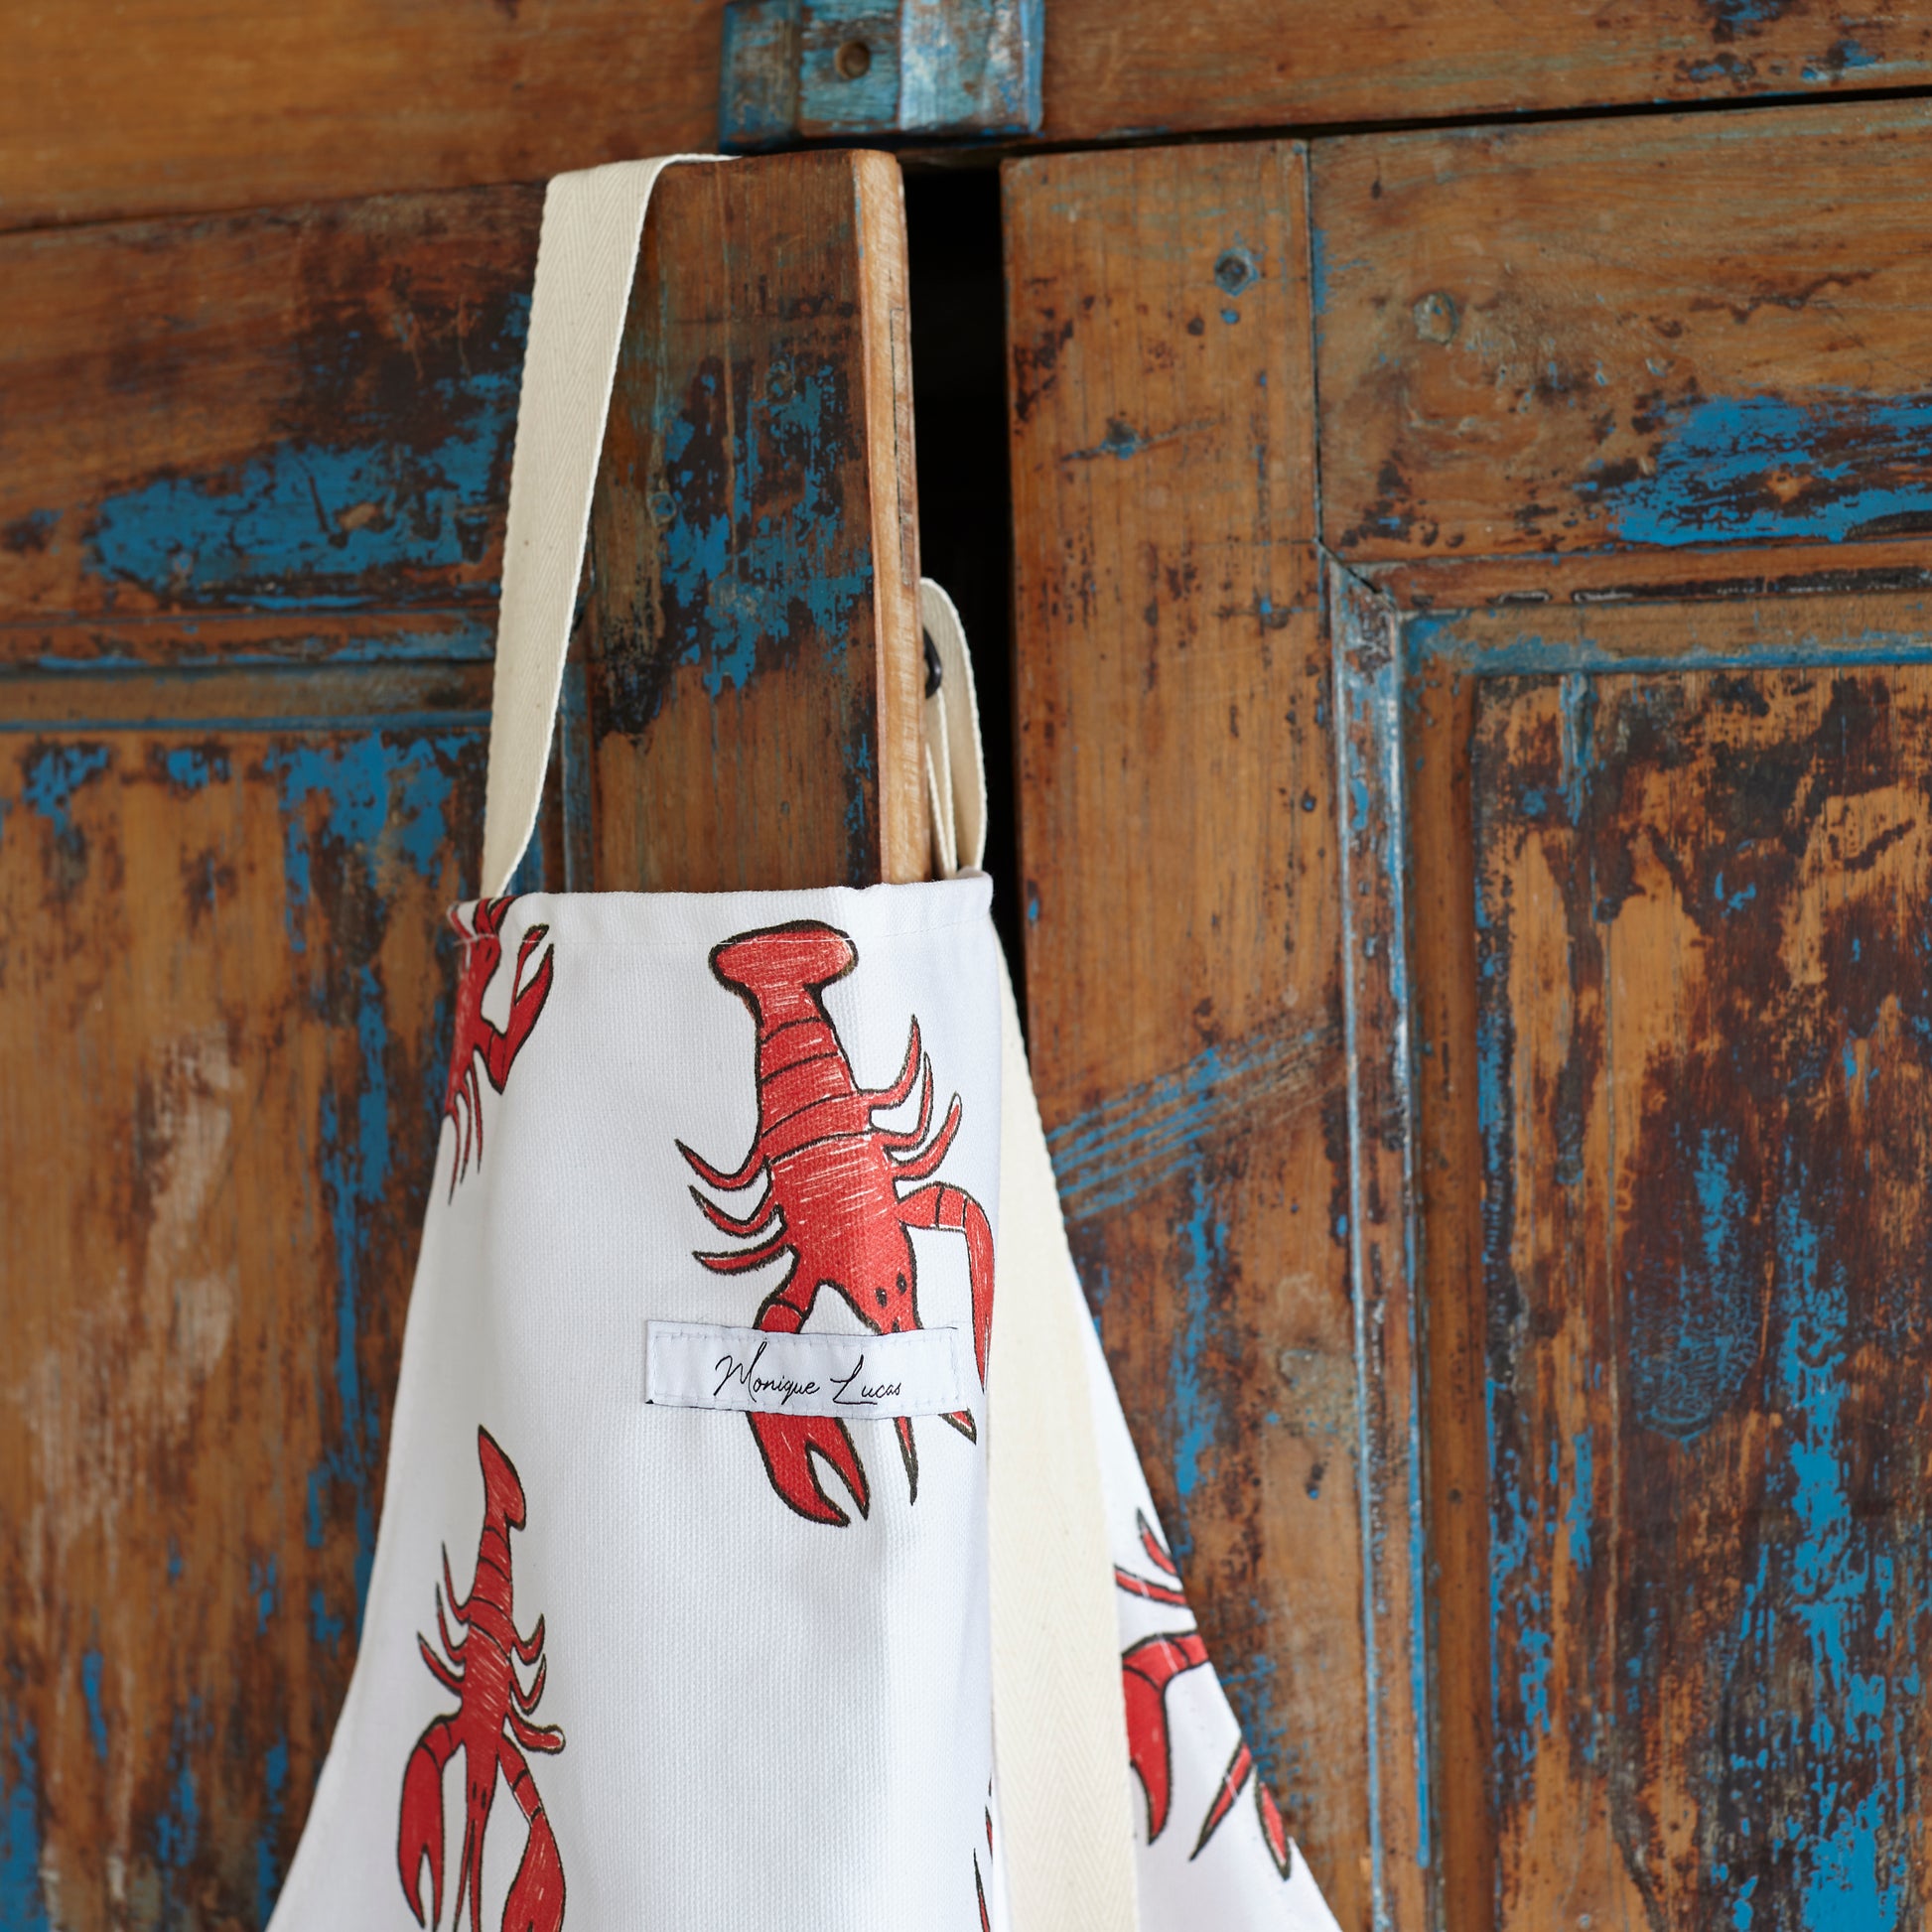 Lobster print apron close up on cuboard door 